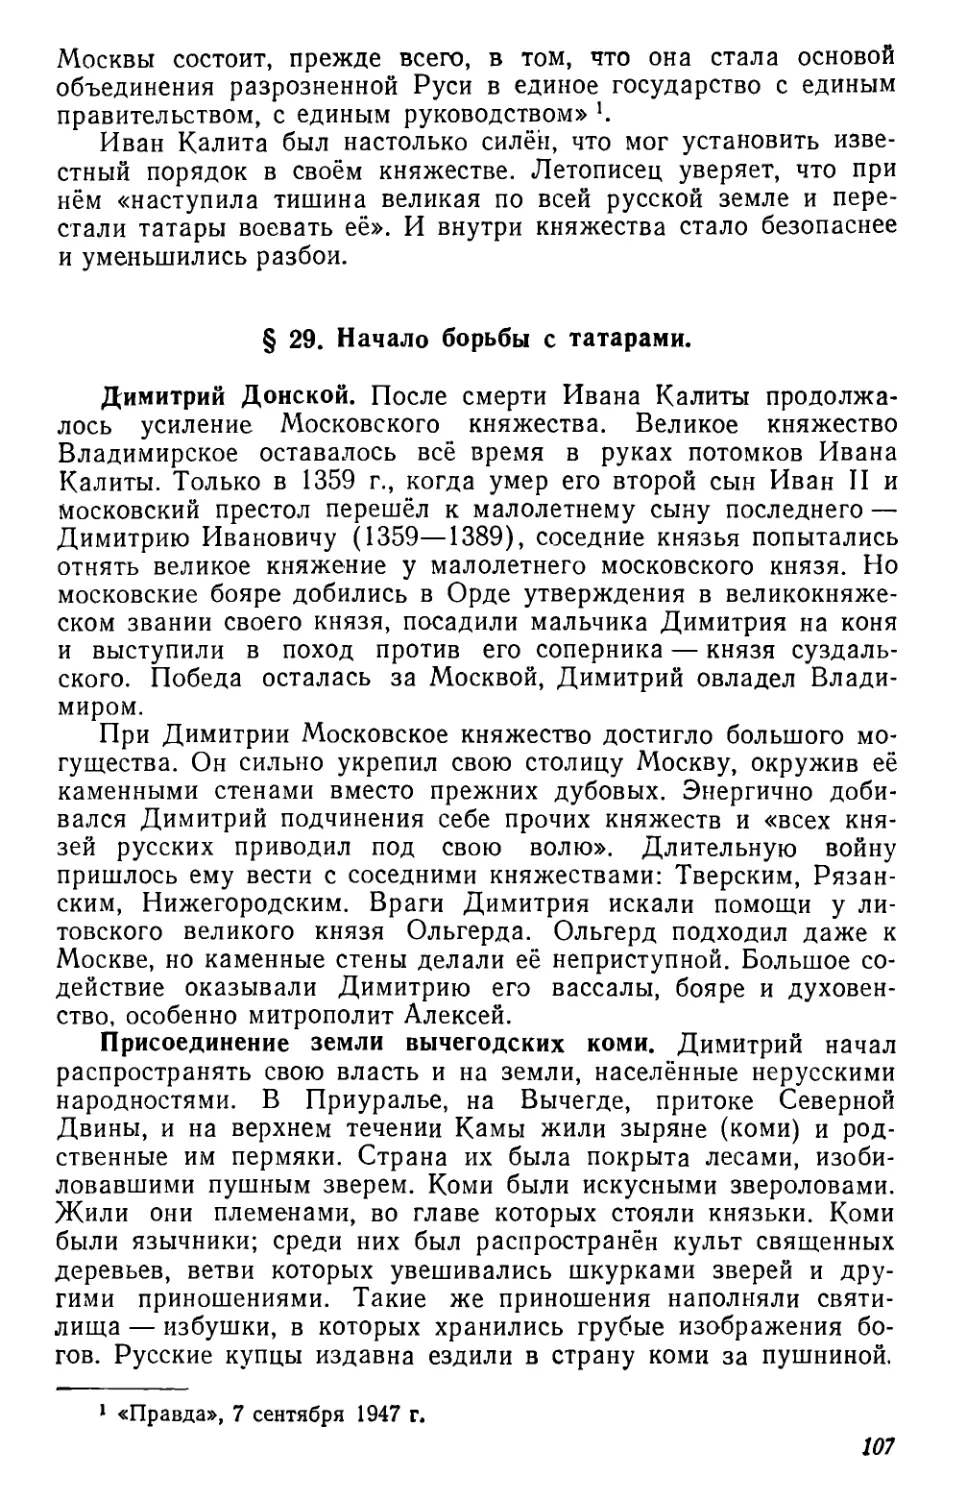 § 29. Начало борьбы с татарами